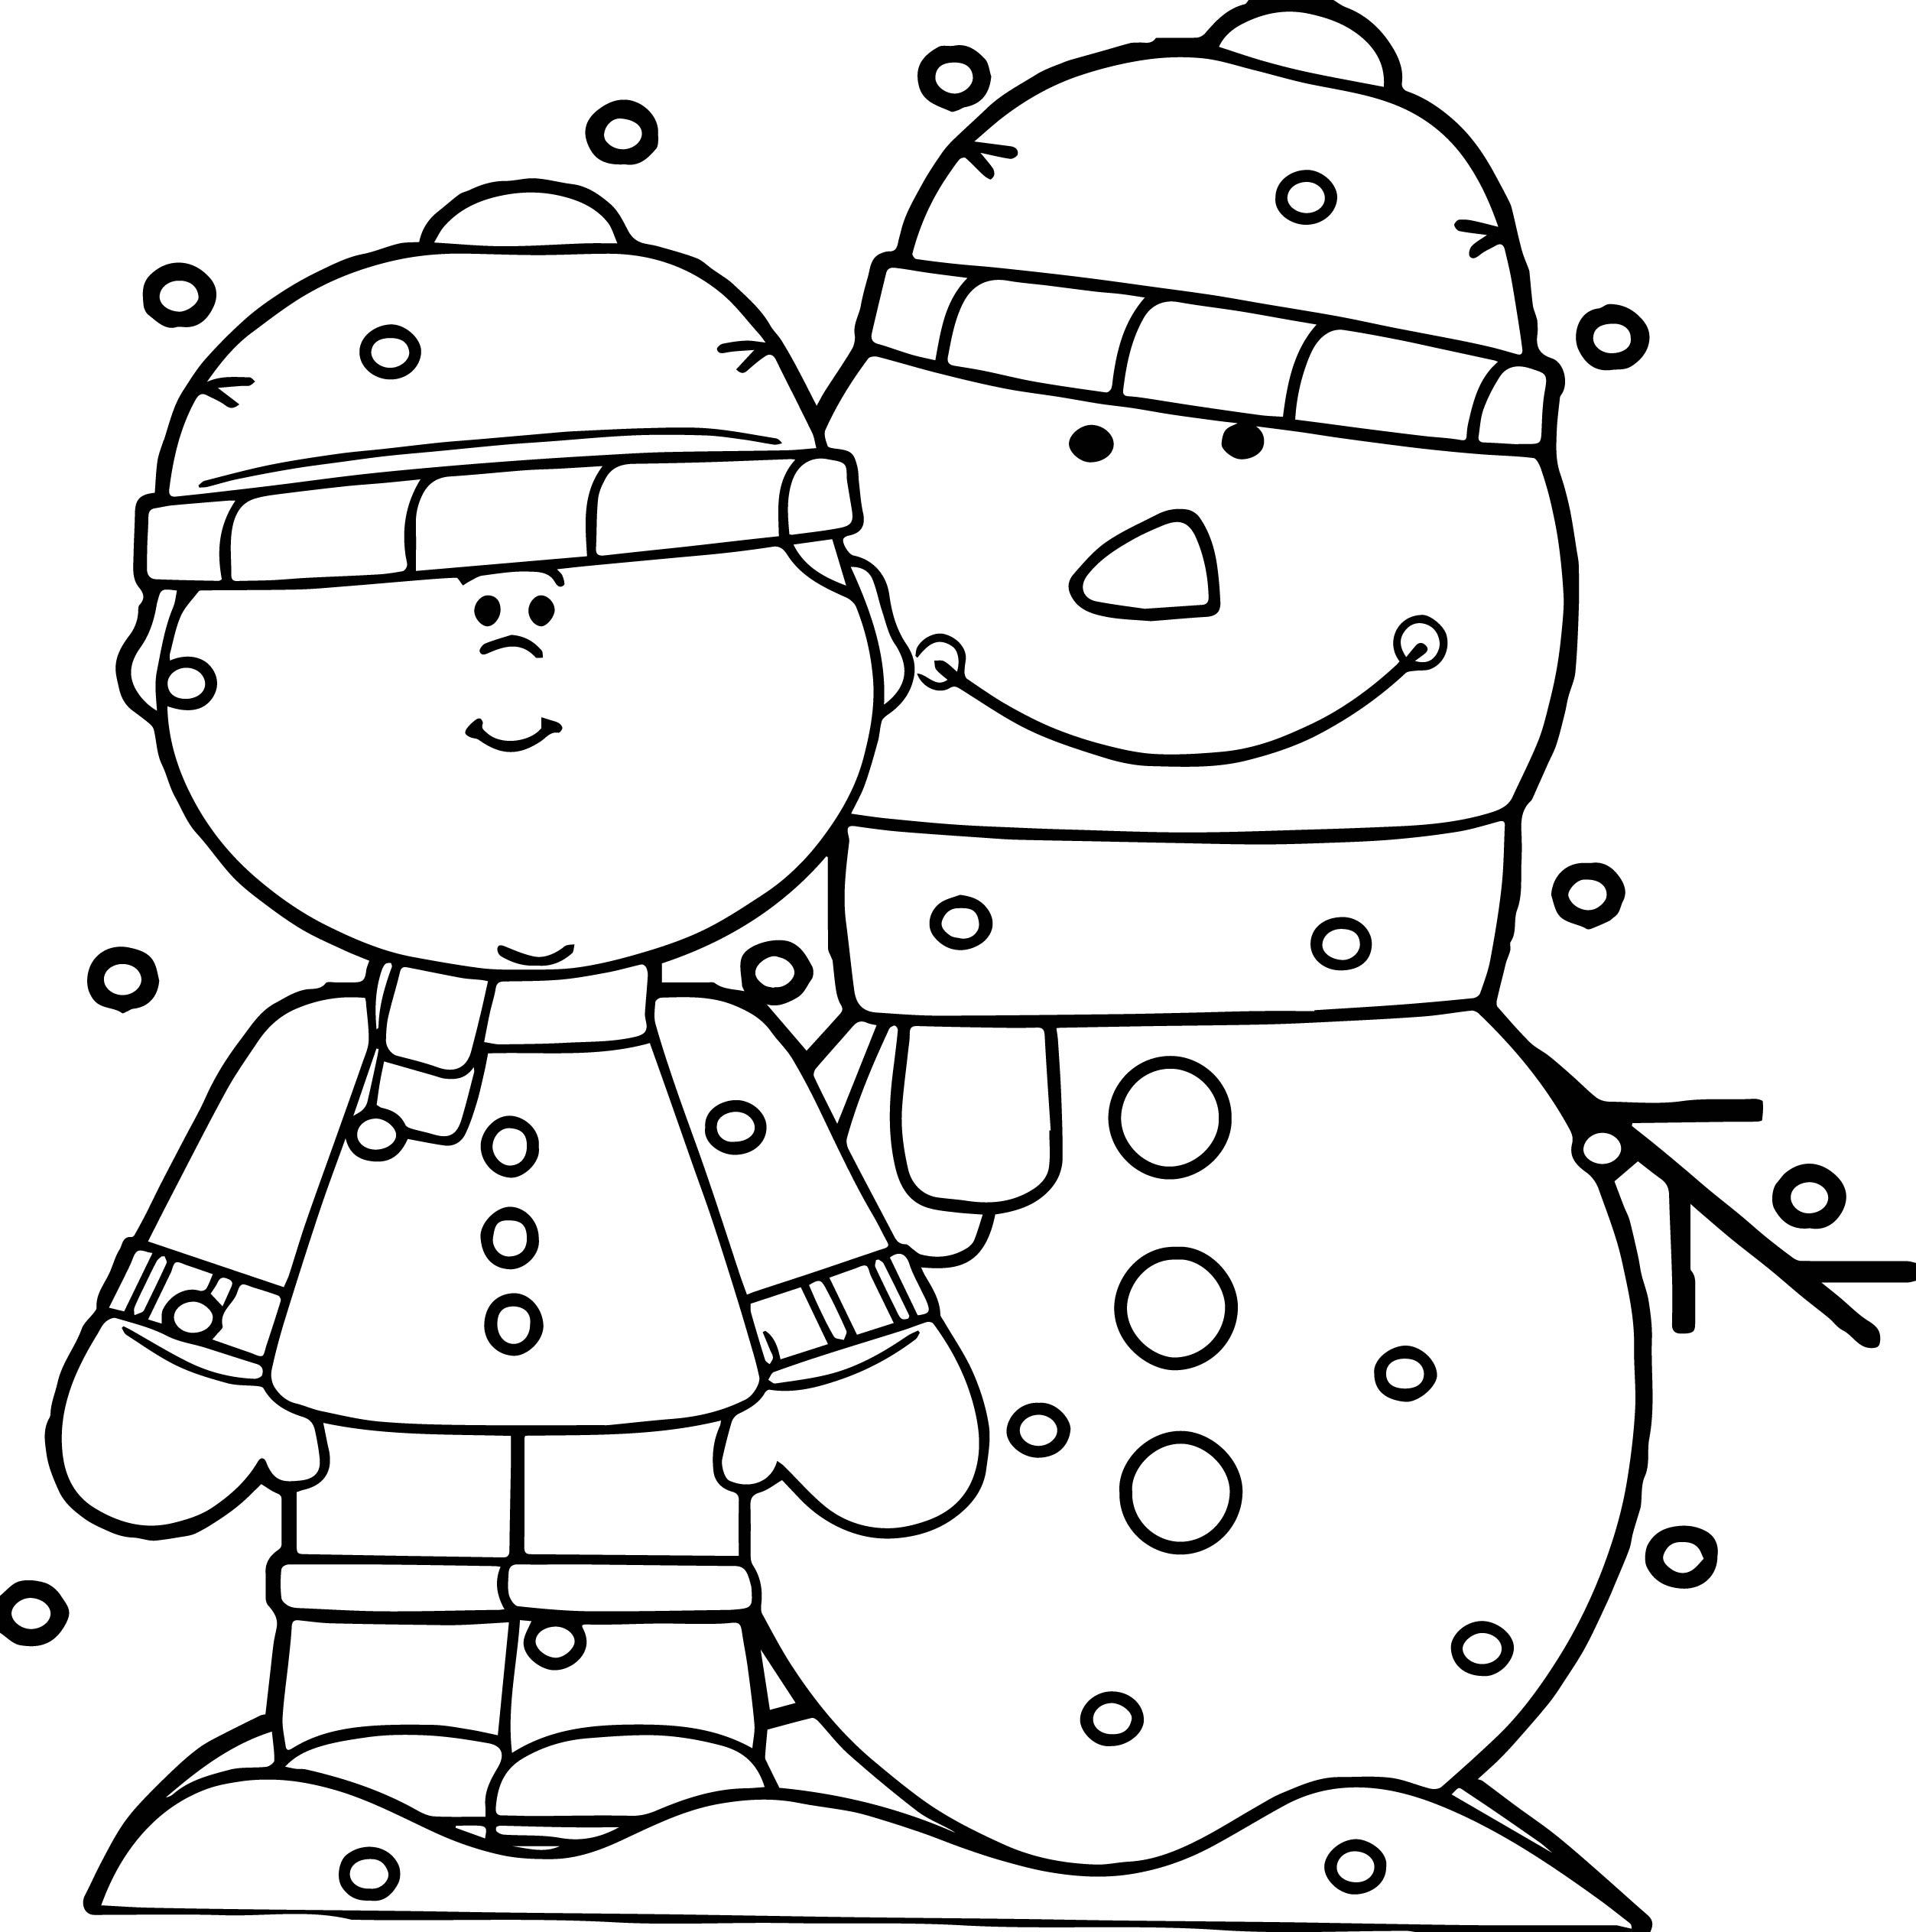 snowmen at night book pdf